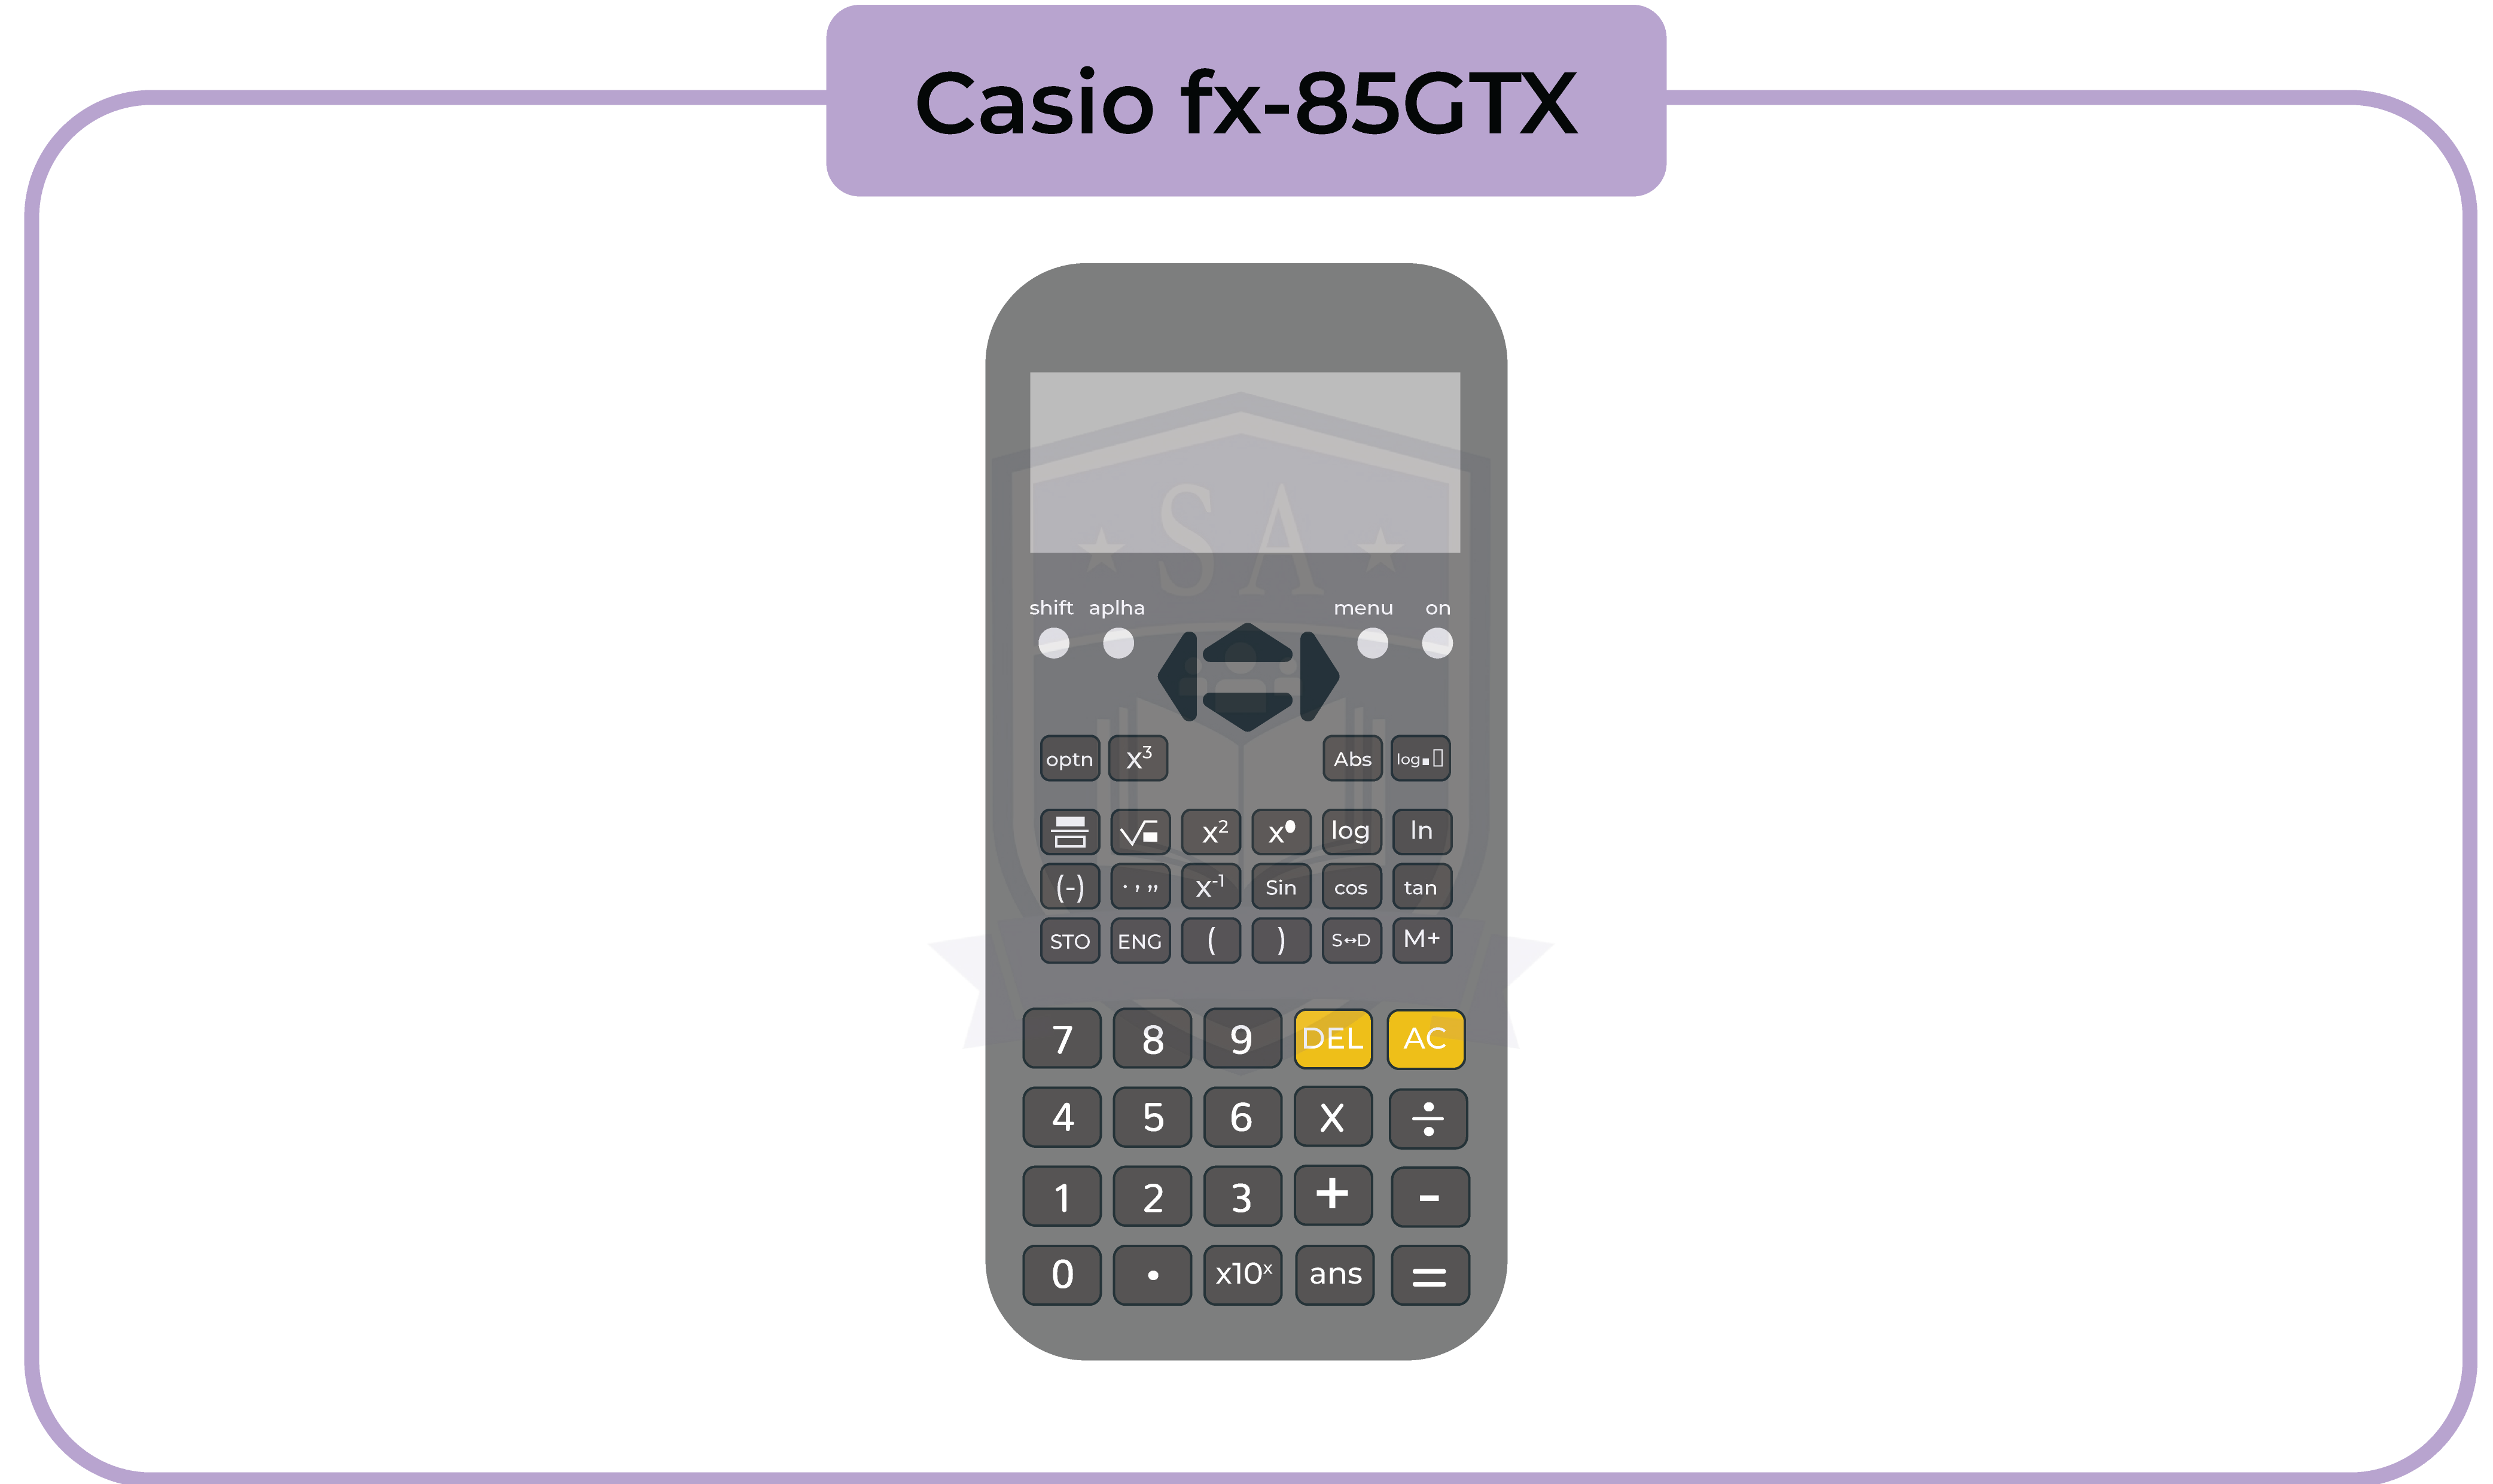 edexcel_igcse_mathematics a_topic 11_electronic calculator_001_Casio fx-85GTX